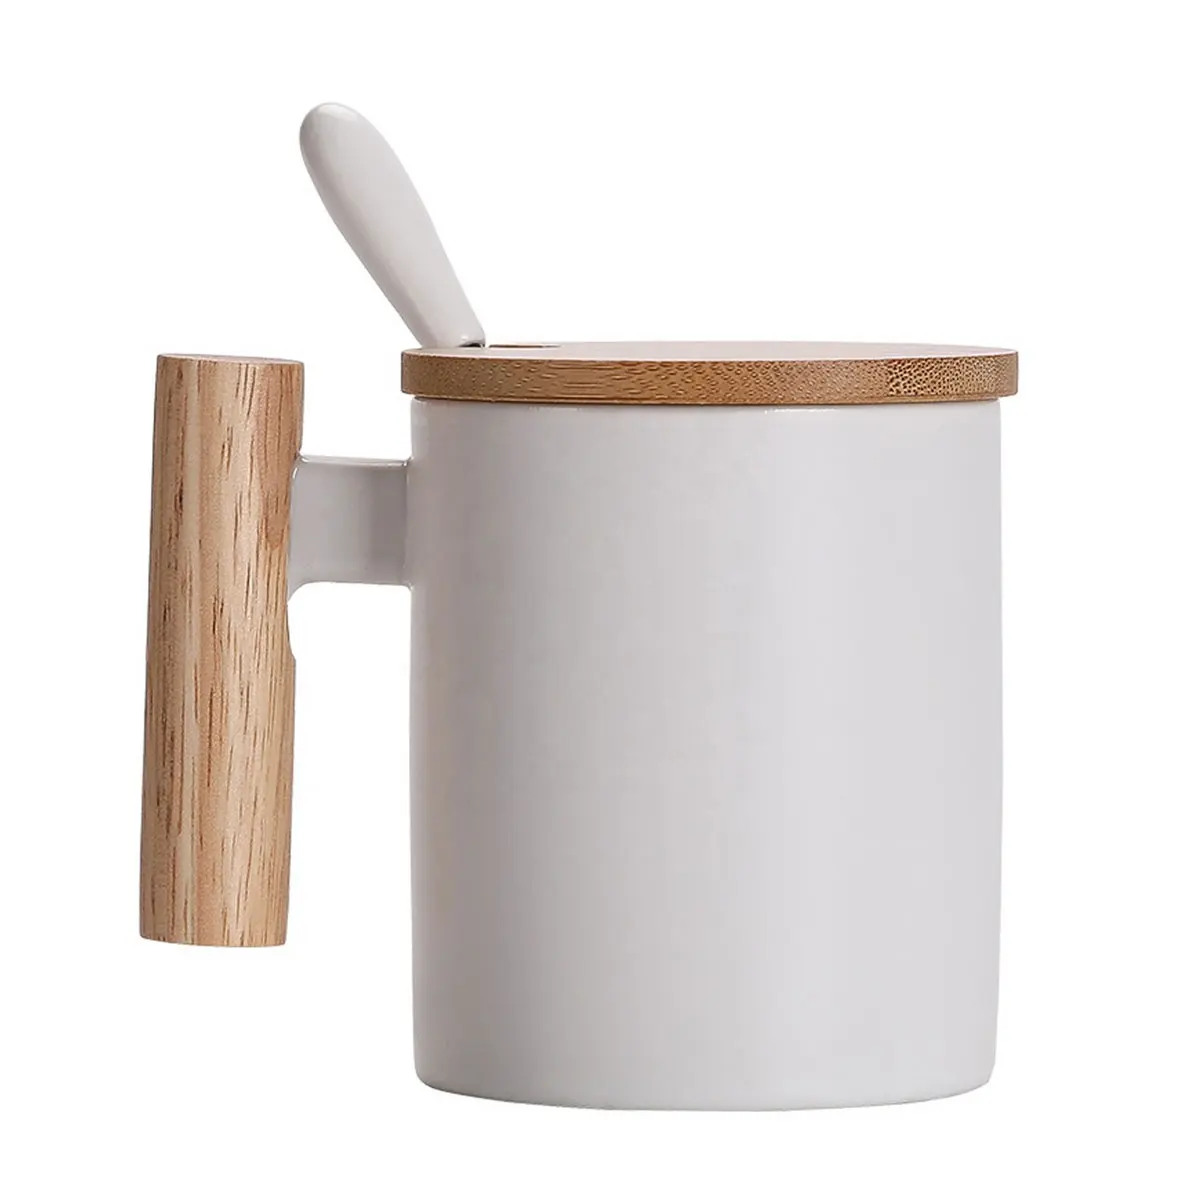 Ceramic Mugs Hot Sale Wooden Handle Coffee Mugs Eco-friendly Cup Travel Coffee Mug with Lid Spoon Gift Box